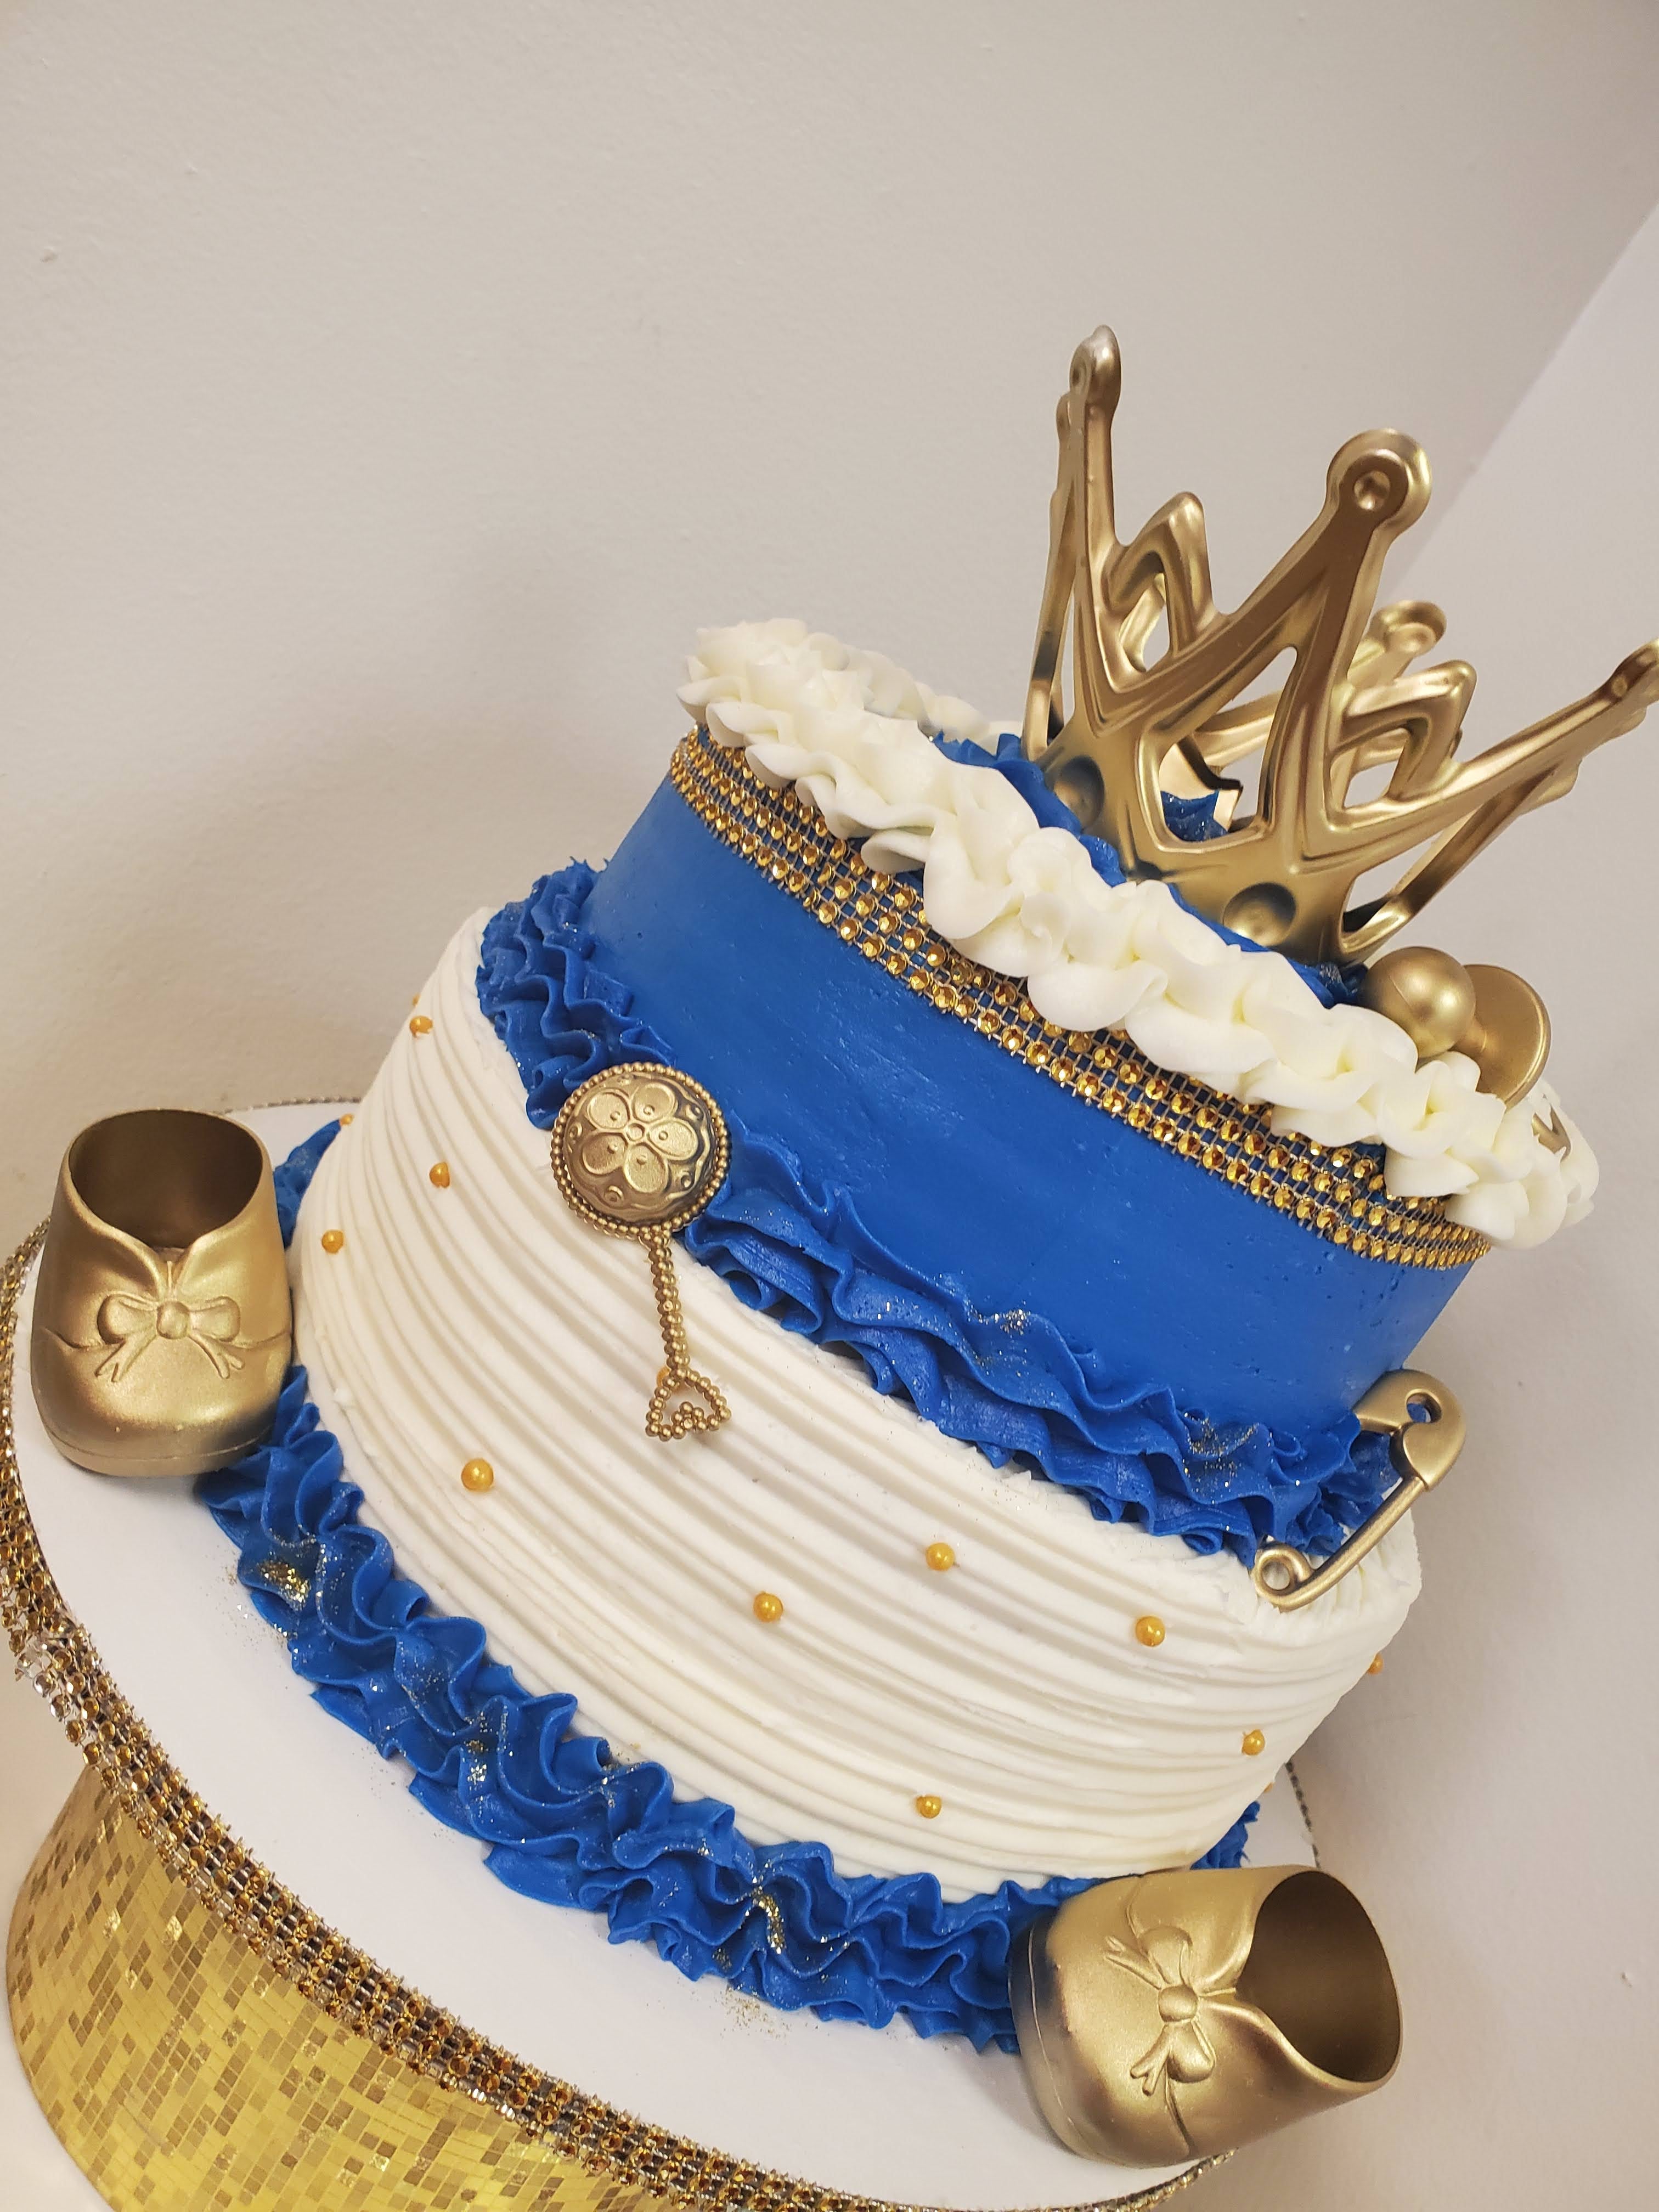 Elegant Two Tier Rosette Cake | Engagement Cake | Order Custom Cakes in  Bangalore – Liliyum Patisserie & Cafe